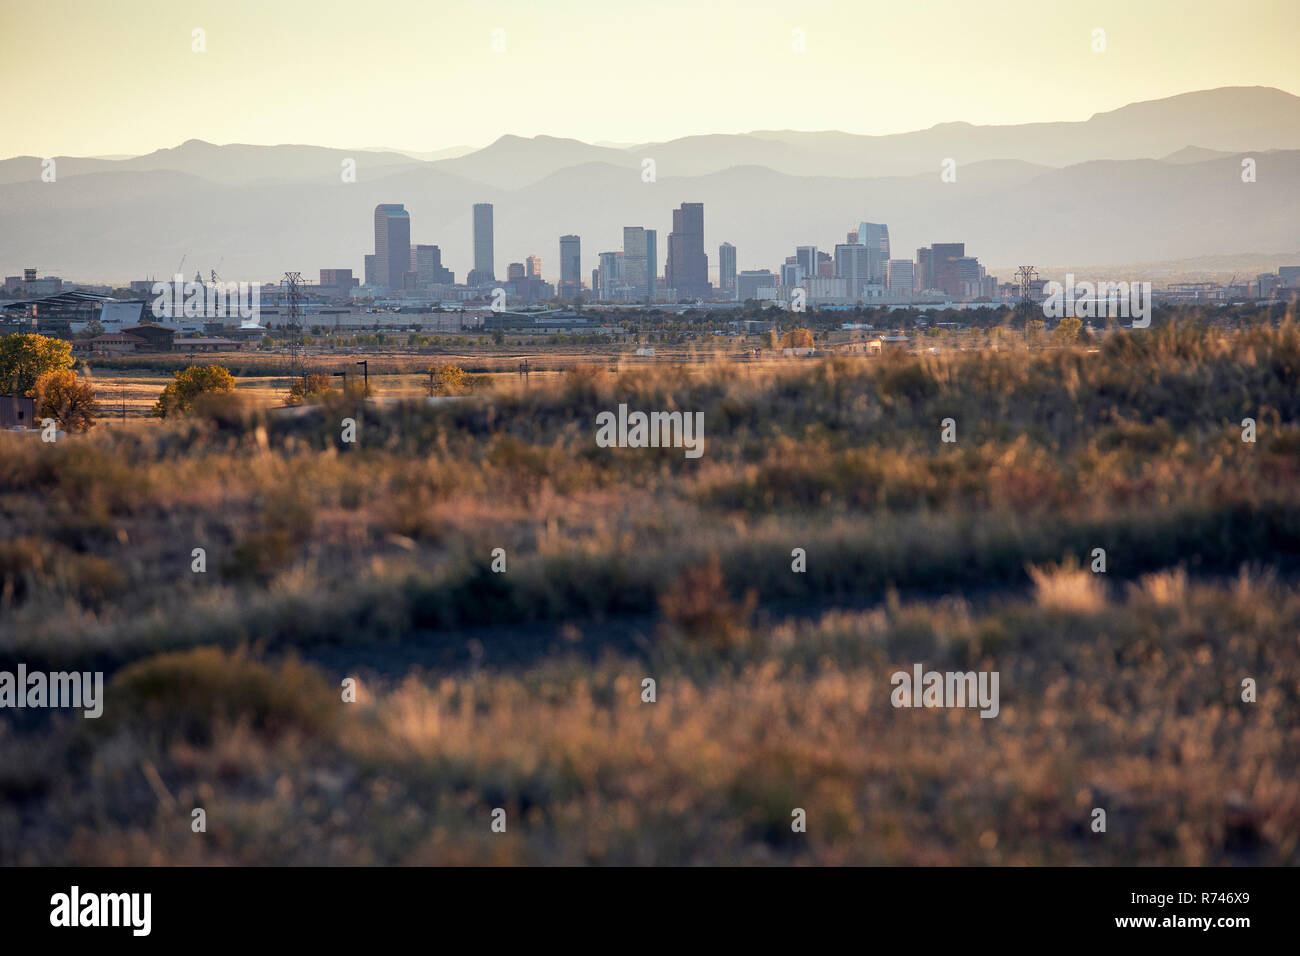 Landscape, skyline of skyscrapers in background, Denver, Colorado, USA Stock Photo